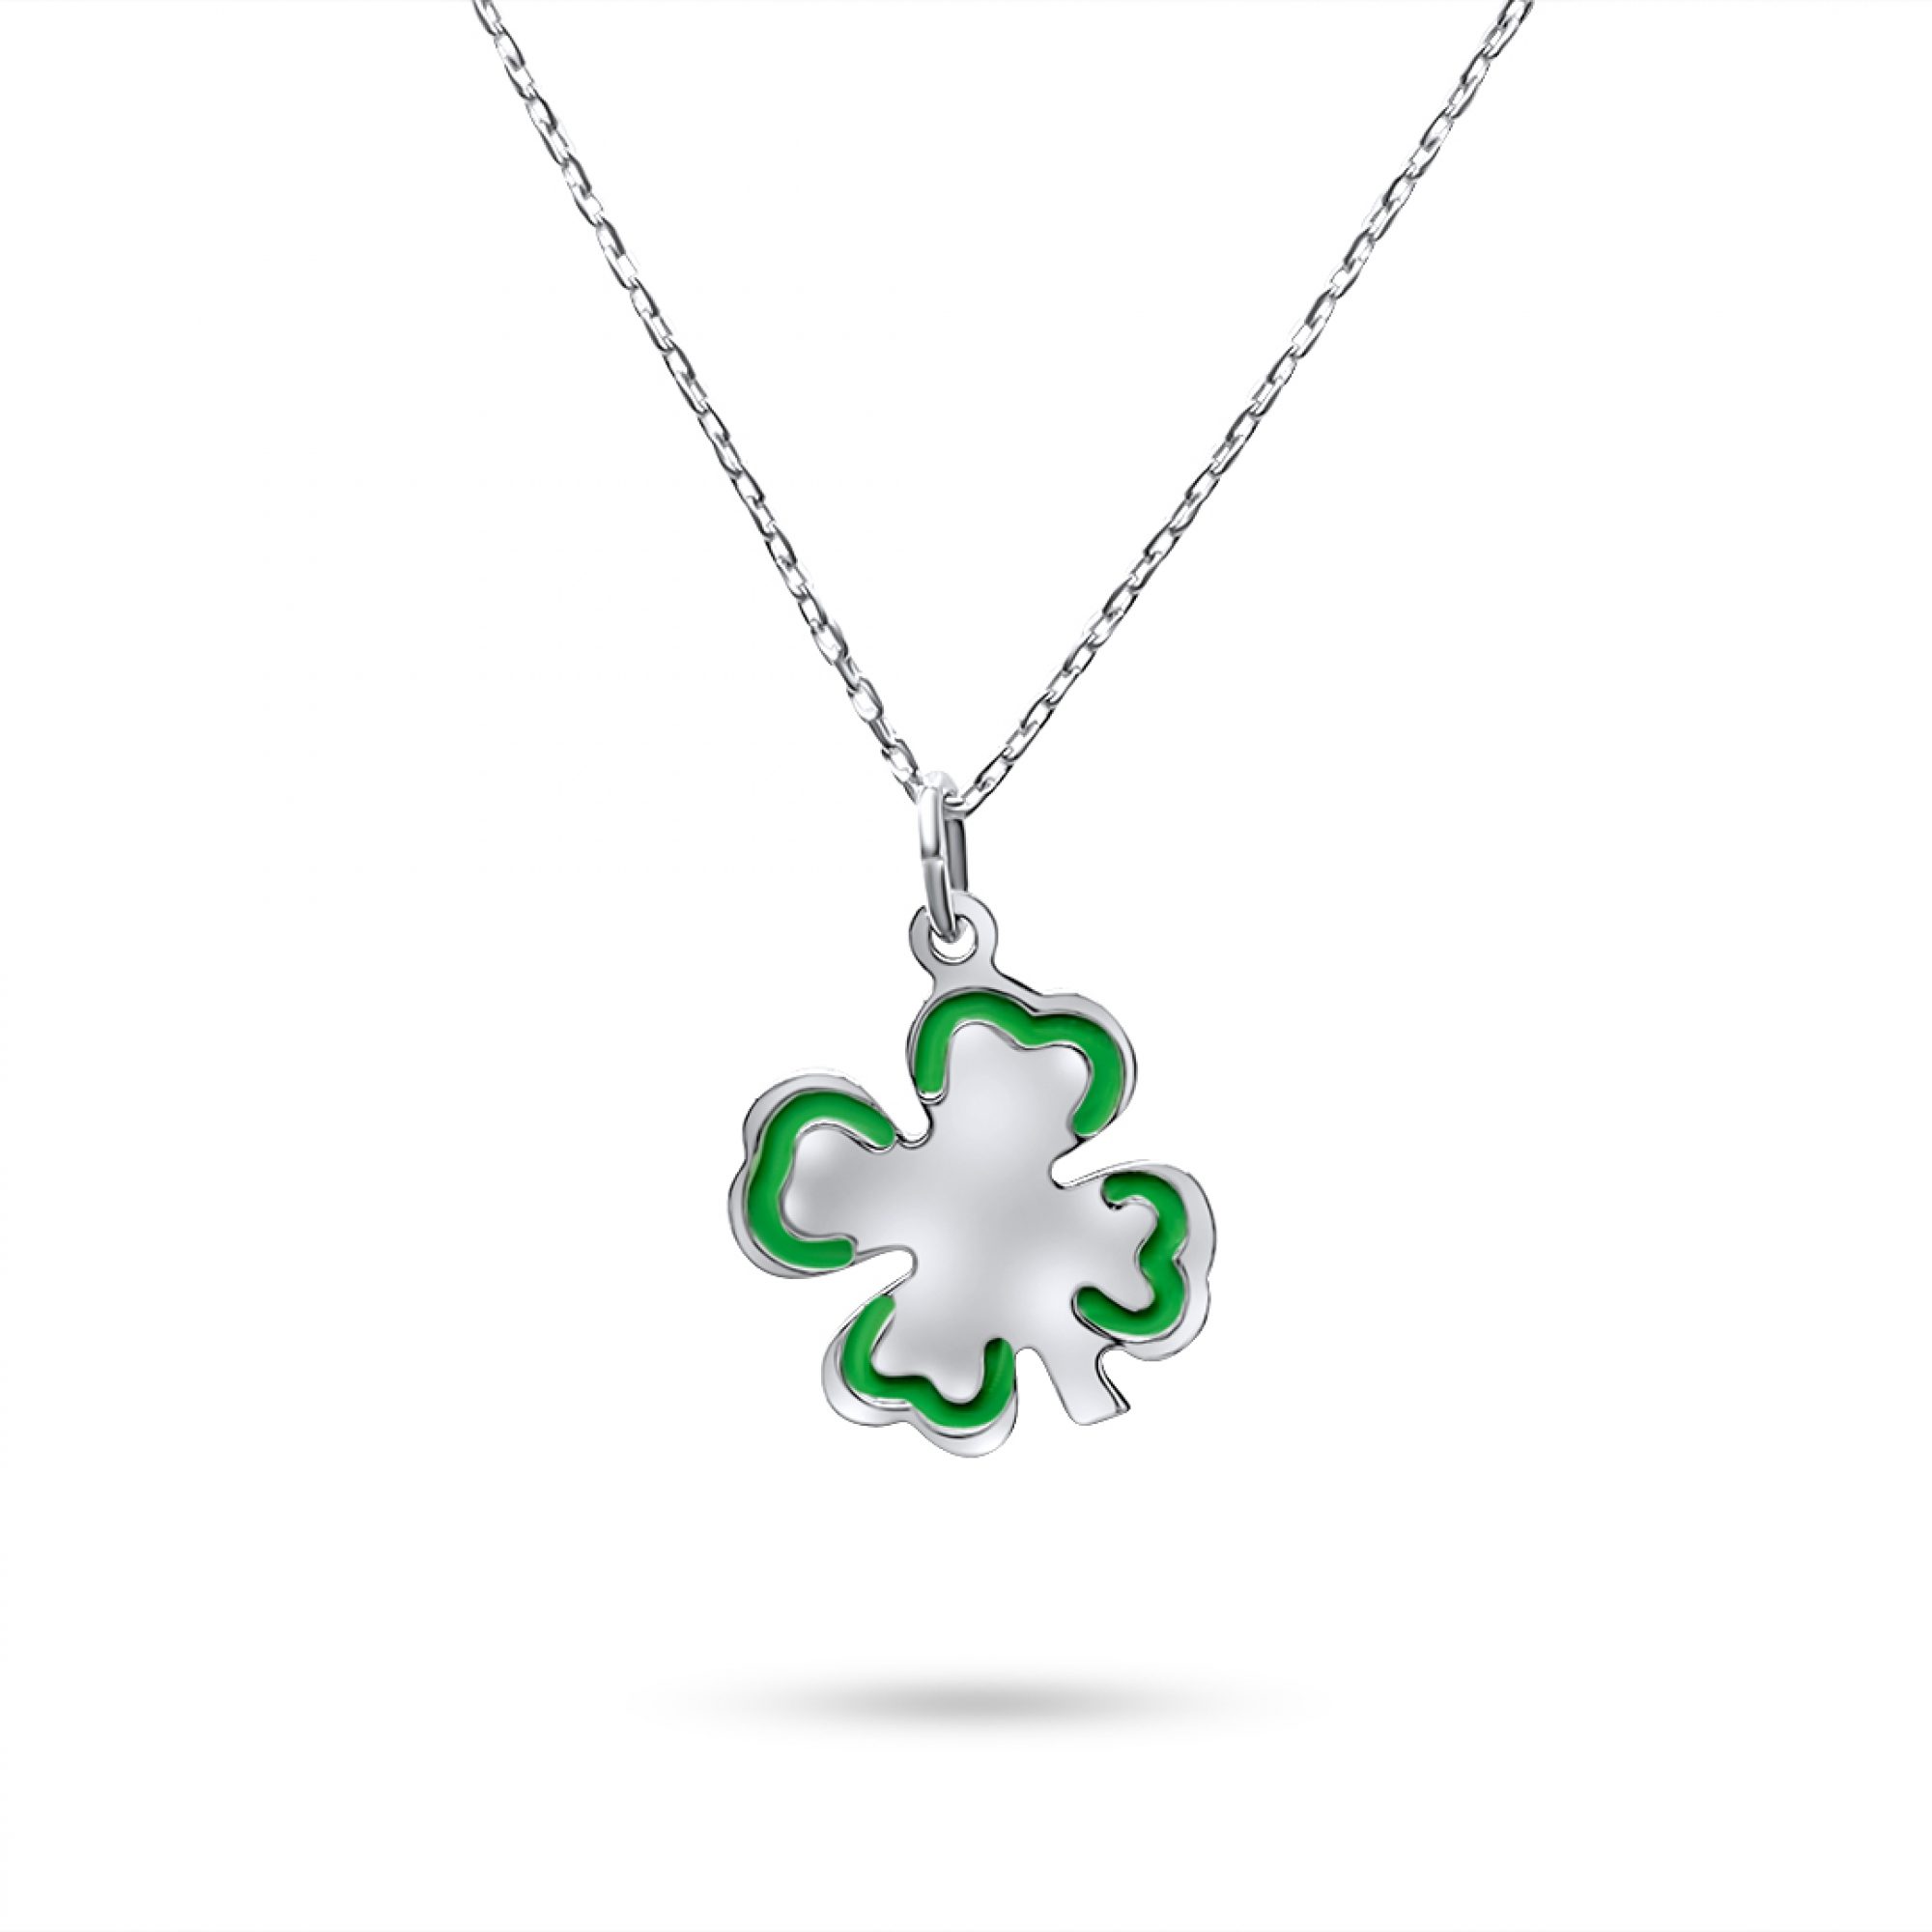 Four leaf clover necklace with enamel